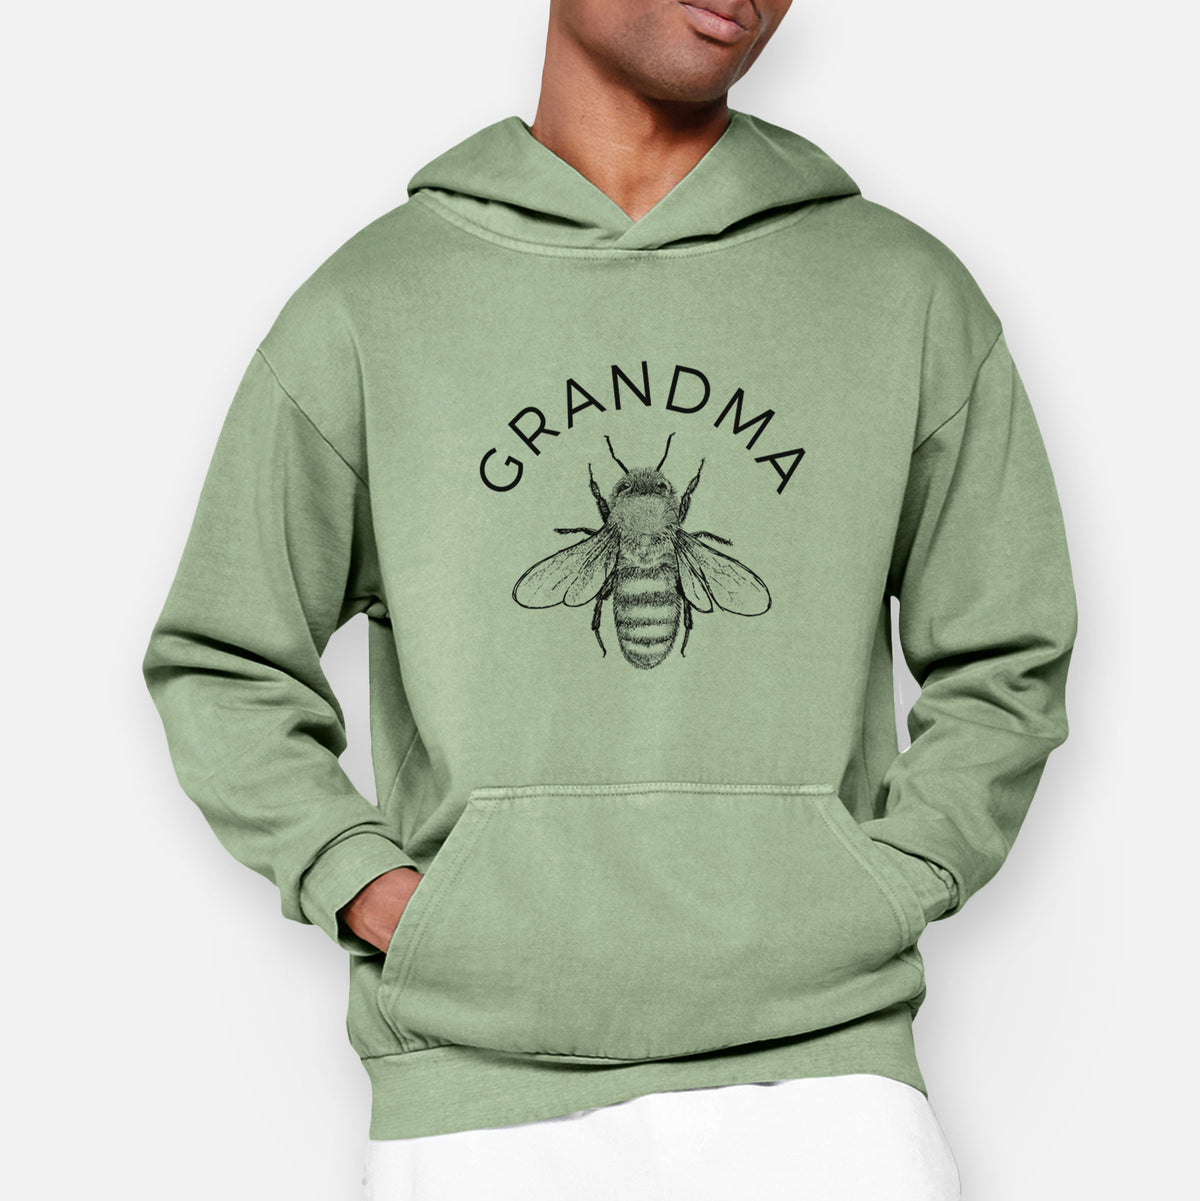 Grandma Bee  - Urban Heavyweight Hoodie